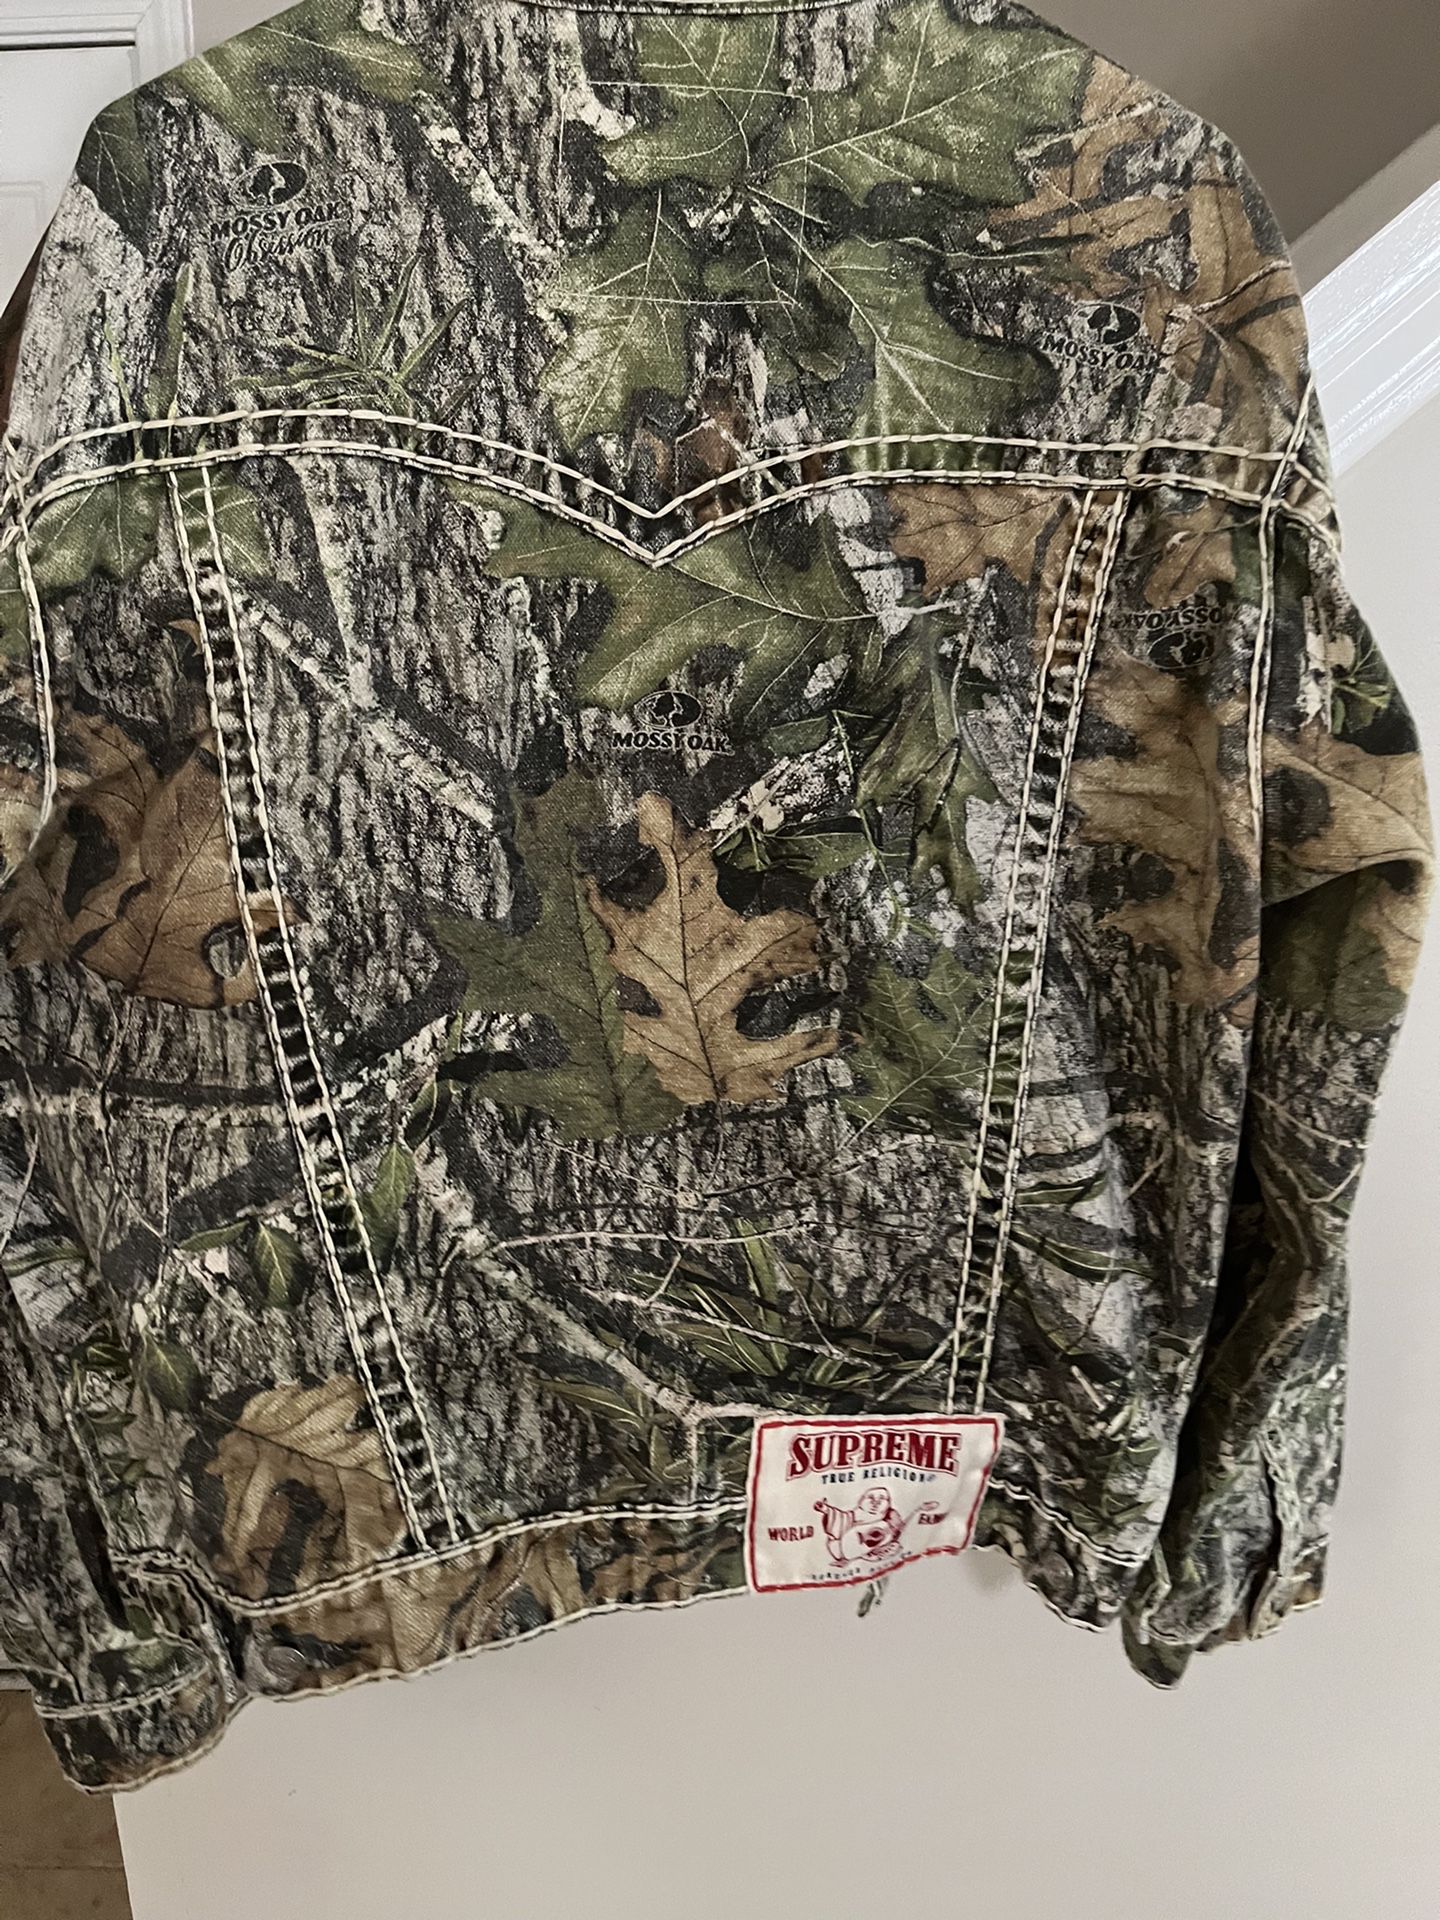 Supreme/True Religion Camoflauge Jacket for Sale in Atlanta, GA - OfferUp